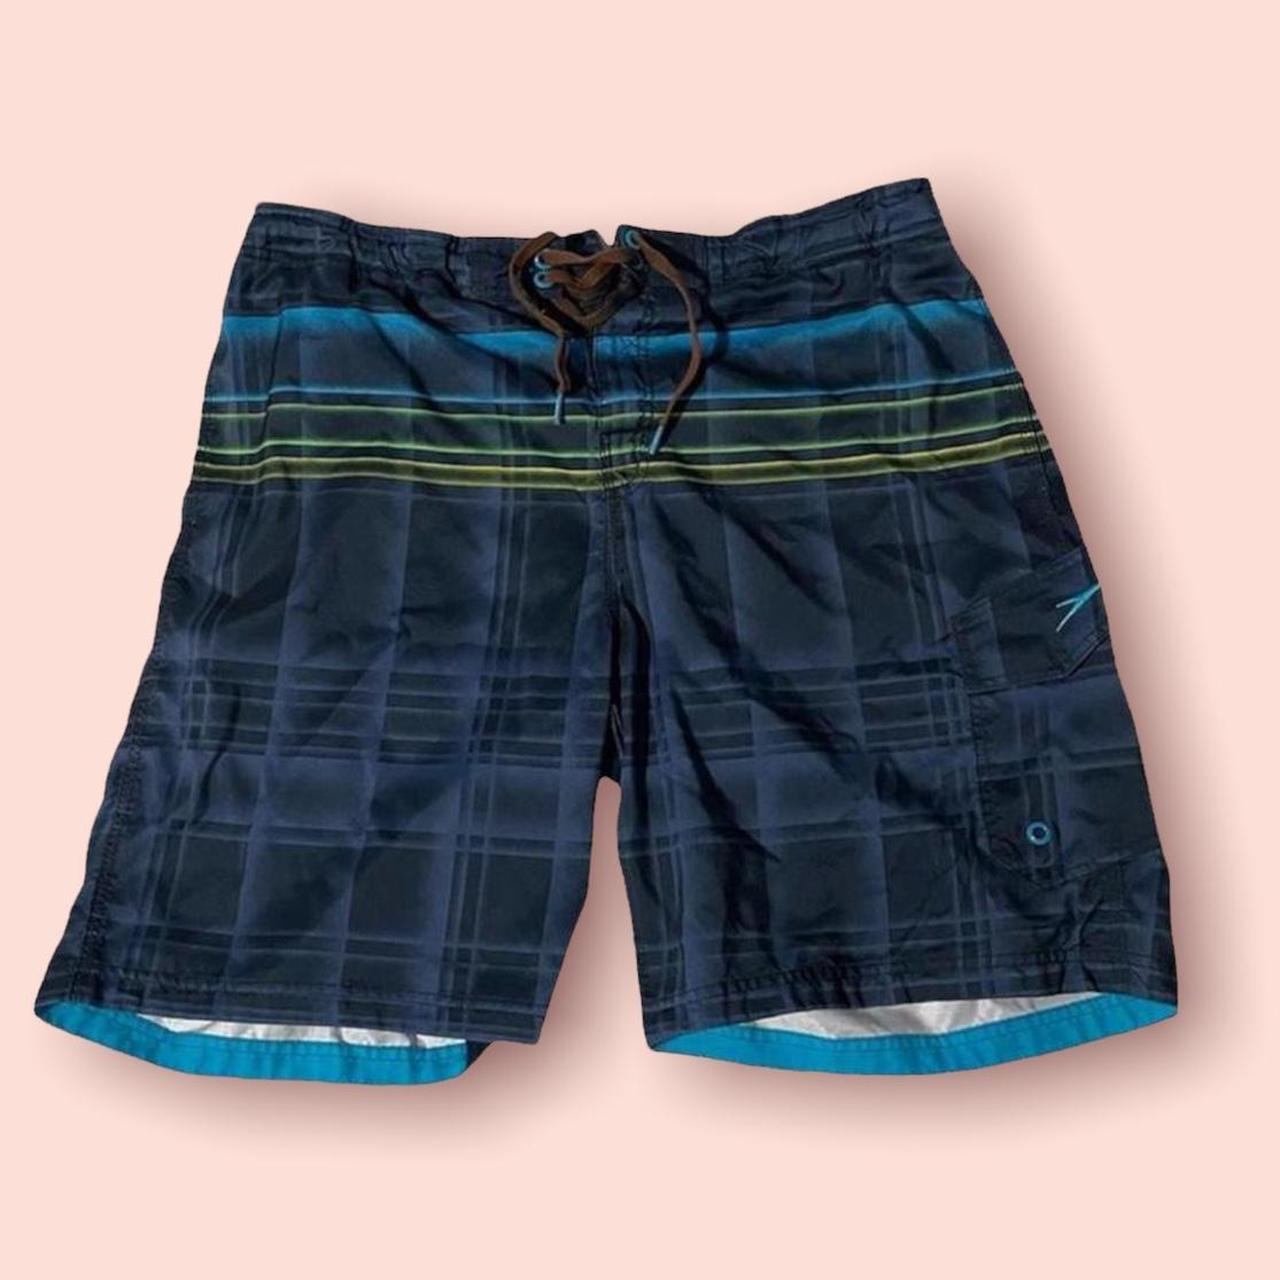 Product Image 3 - Men’s swim shorts (XL). In